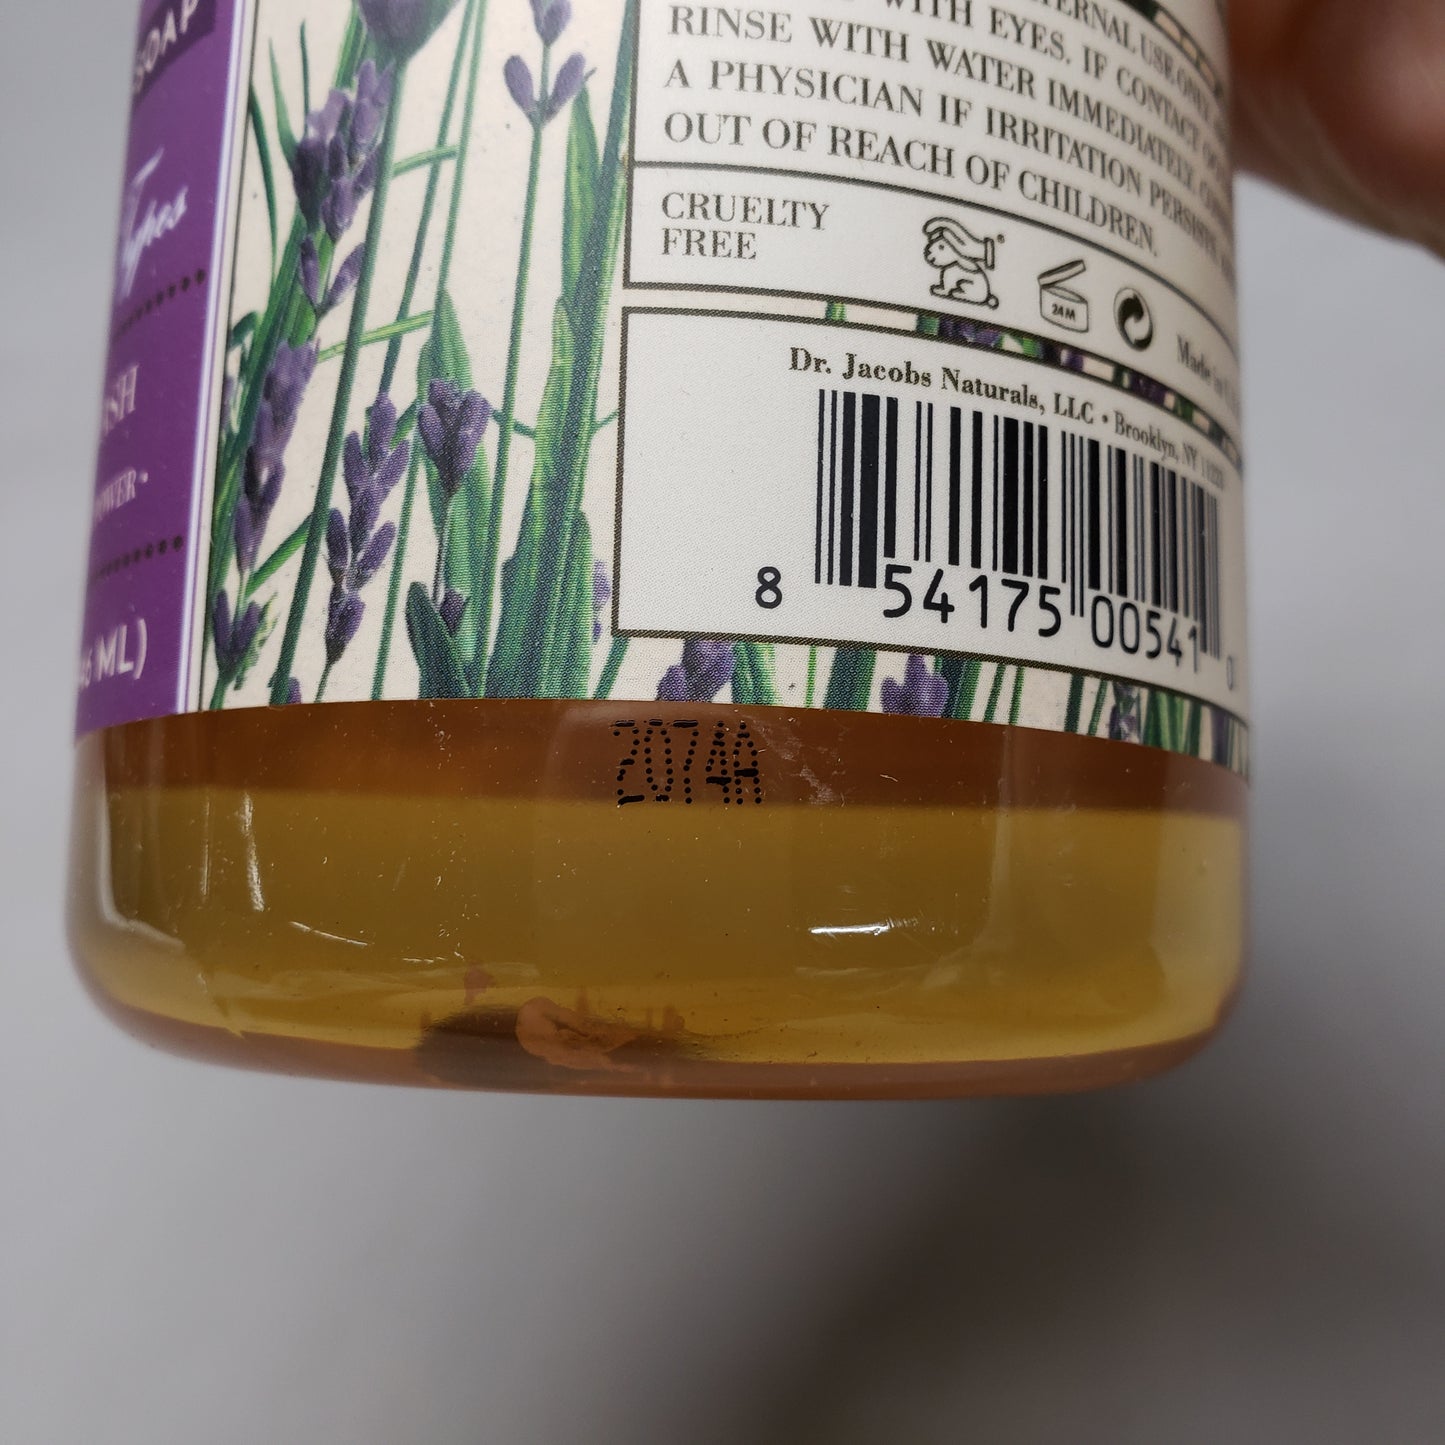 DR. JACOBS NATURALS Lavender Castile Liquid Soap 32 oz Hypoallergenic (New)